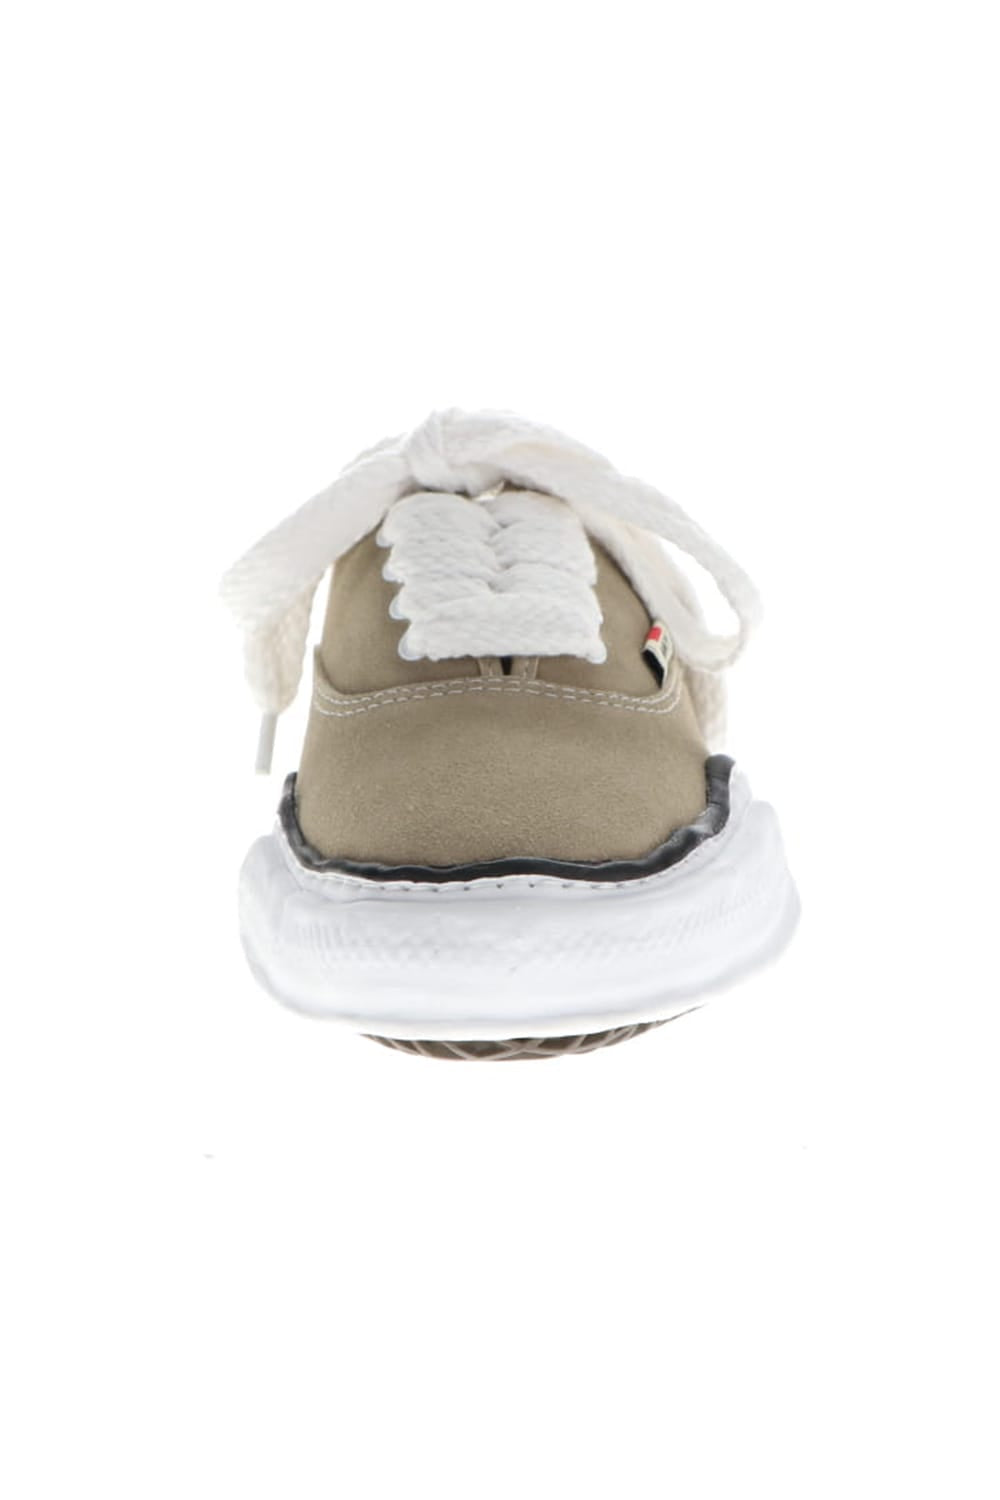 -BAKER- Original sole suede leather Low-Top sneakers Beige